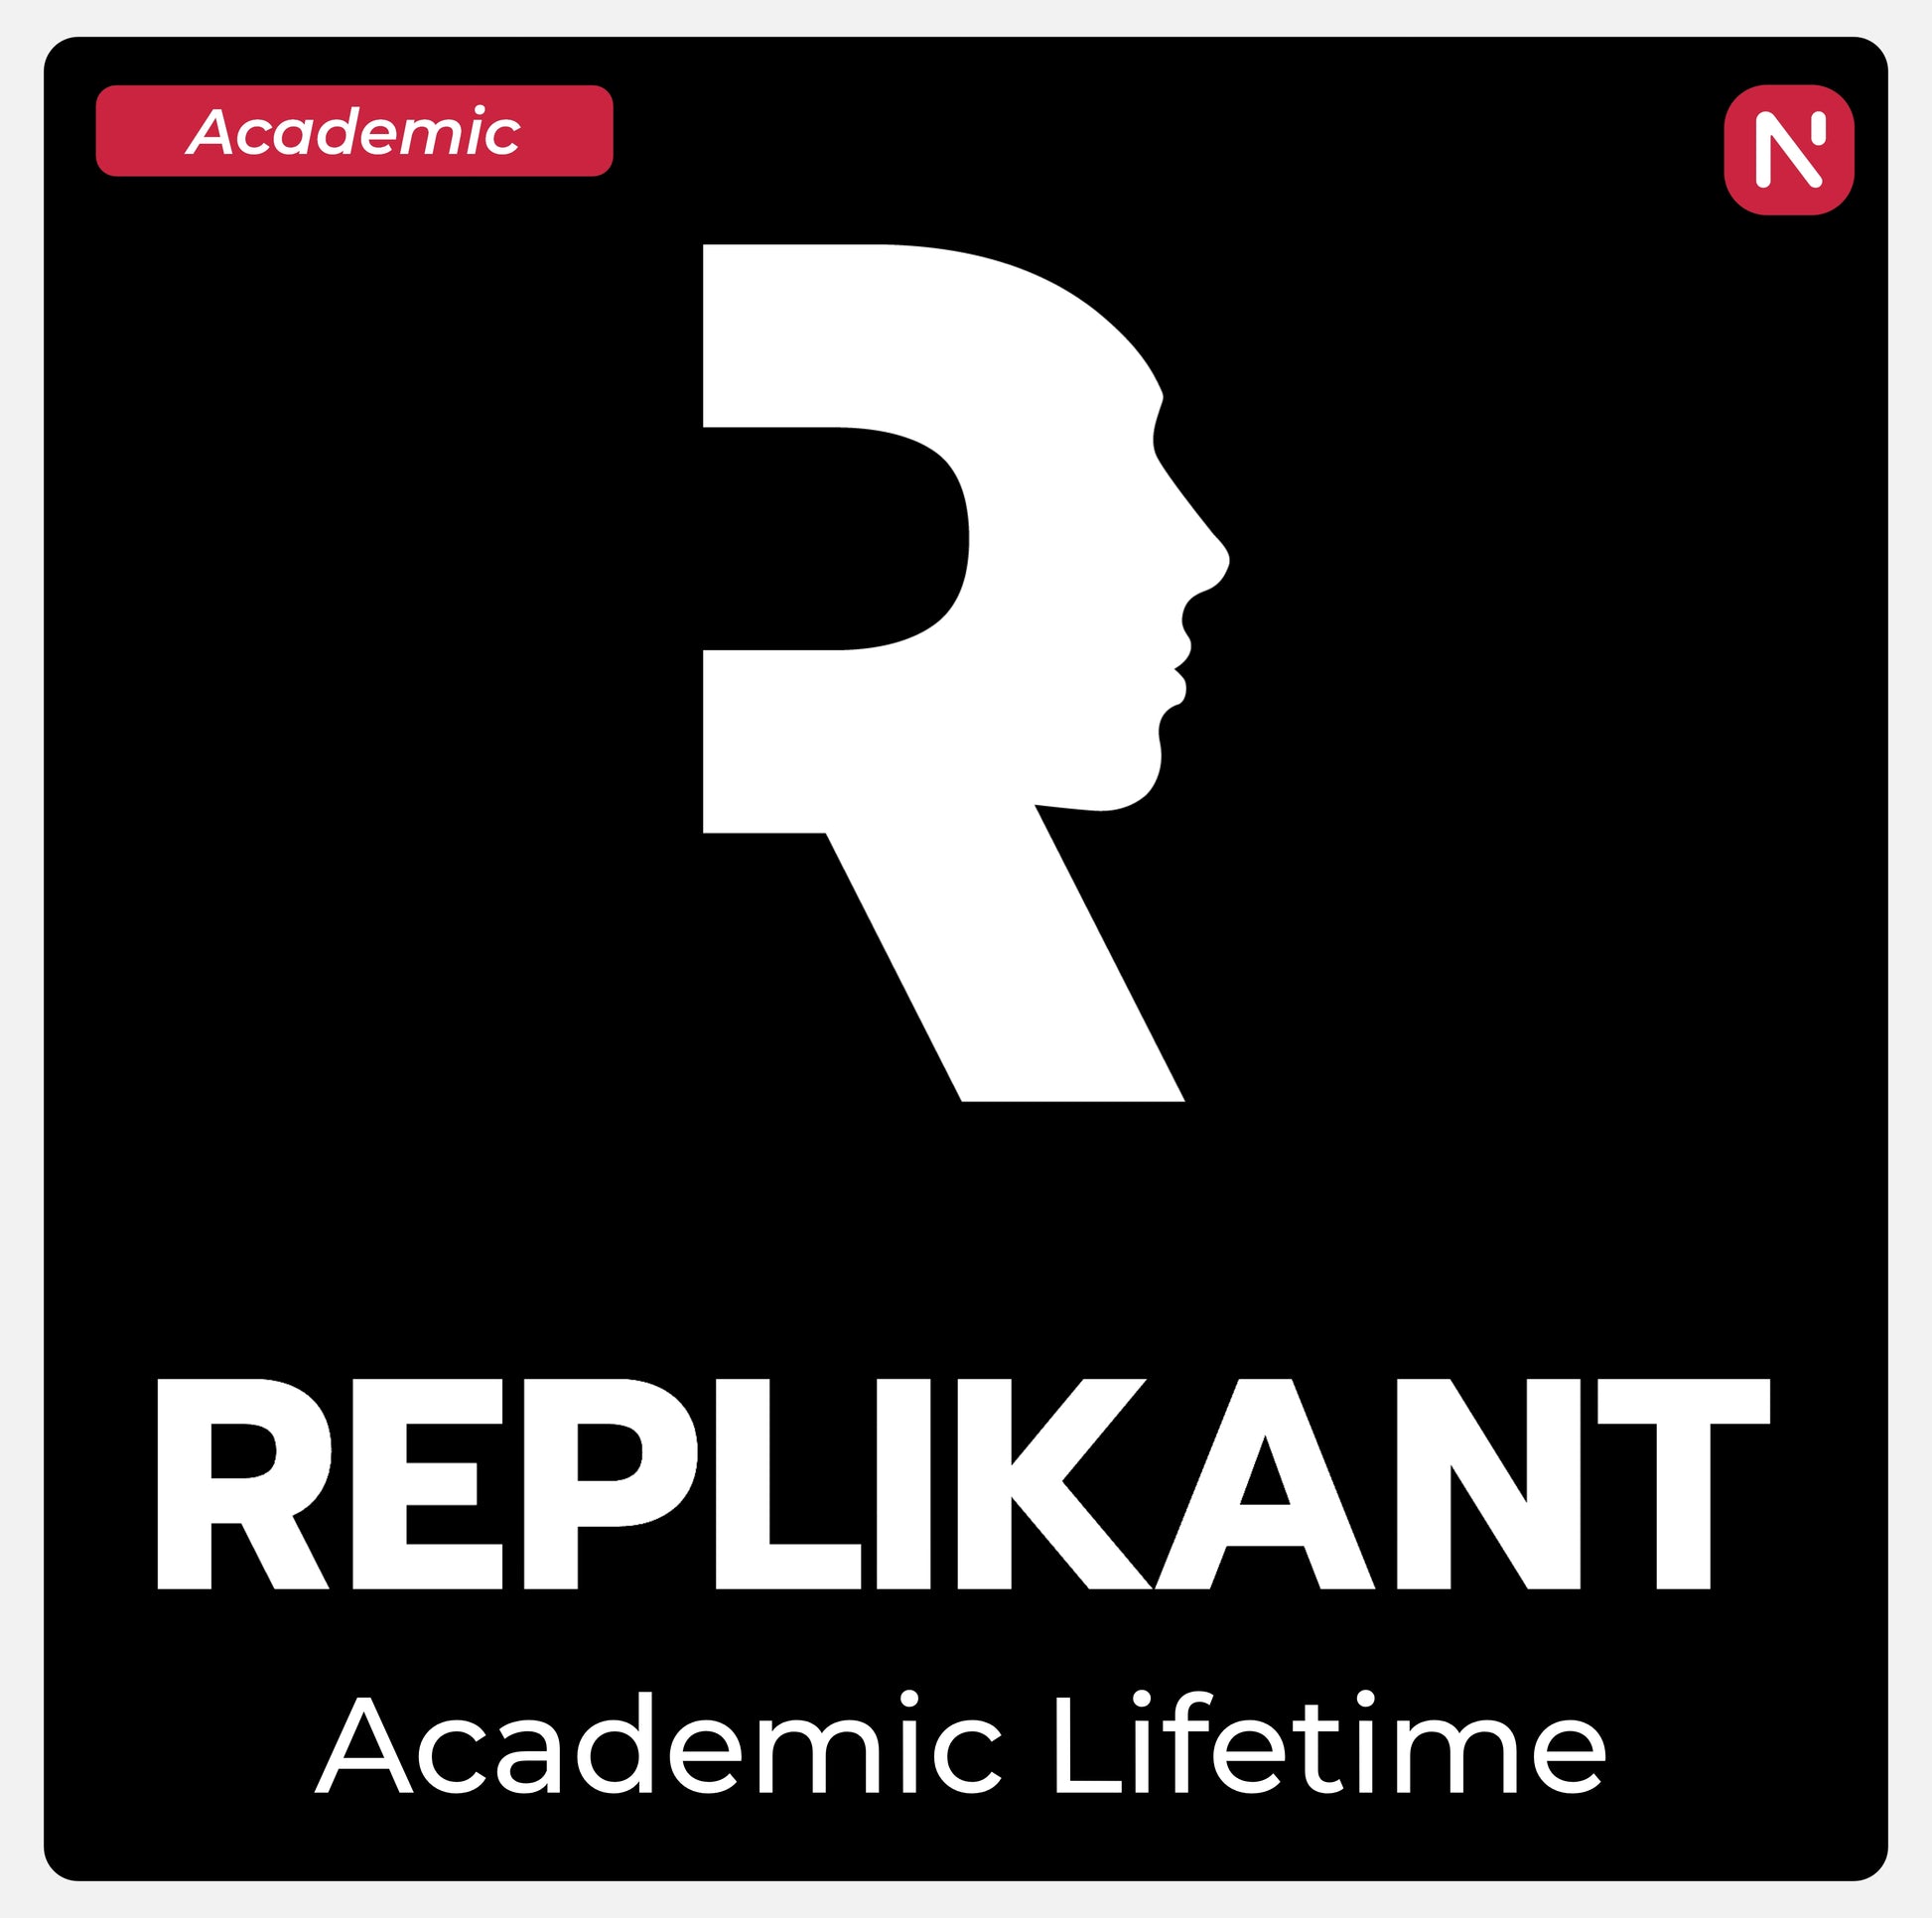 REPLIKANT (Academic Lifetime) for Perception Neuron Noitom International, Inc